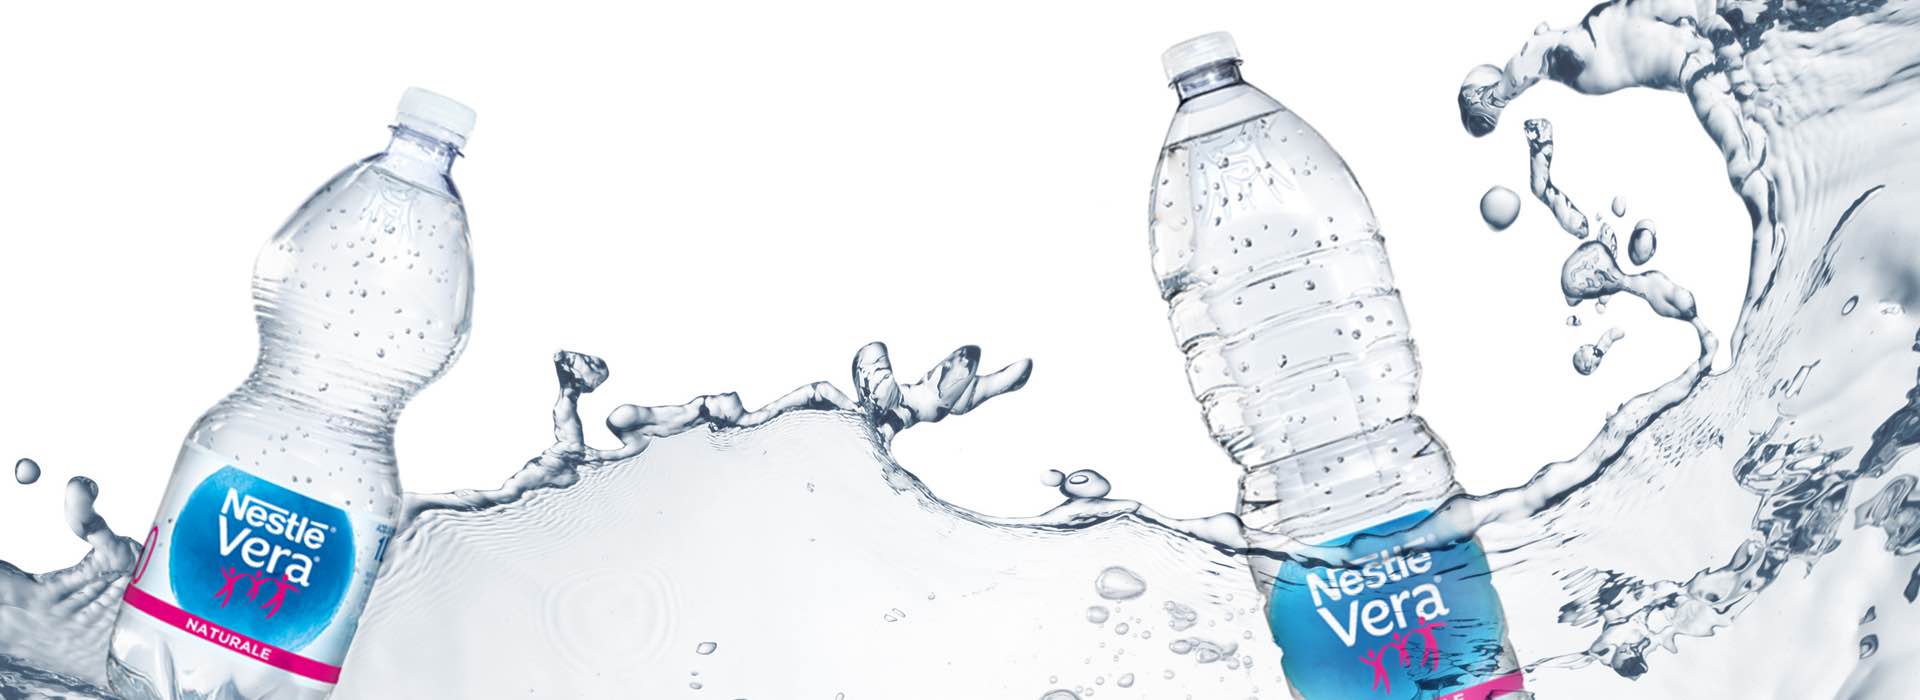 repackaging etichette bottiglie acqua Nestlé Vera